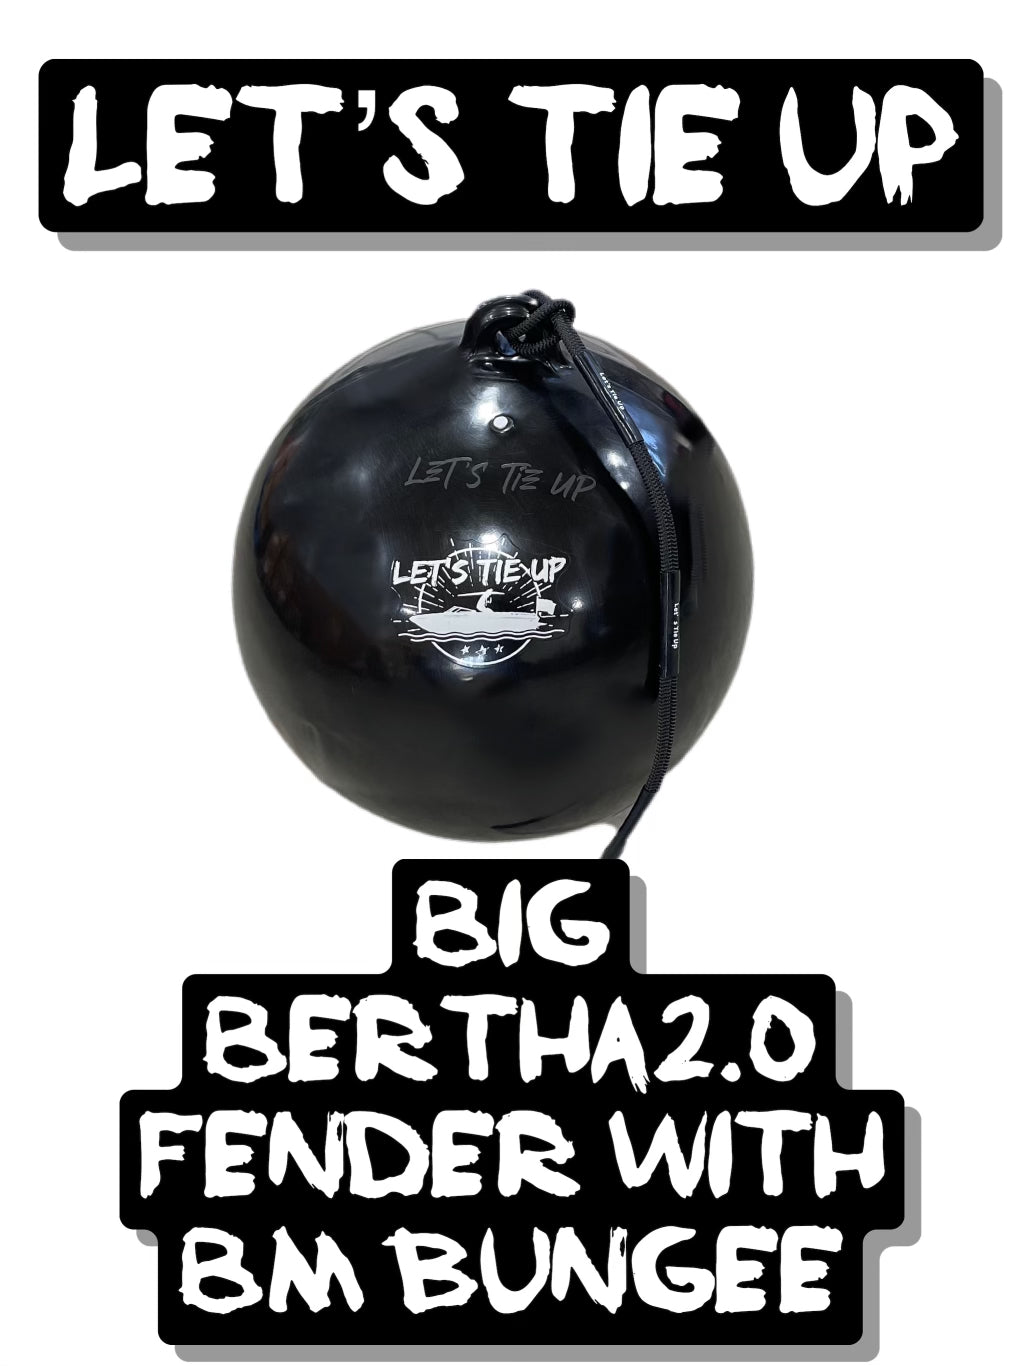 Single Big Bertha 2.0 Fender with Boatswains Mate Bungee